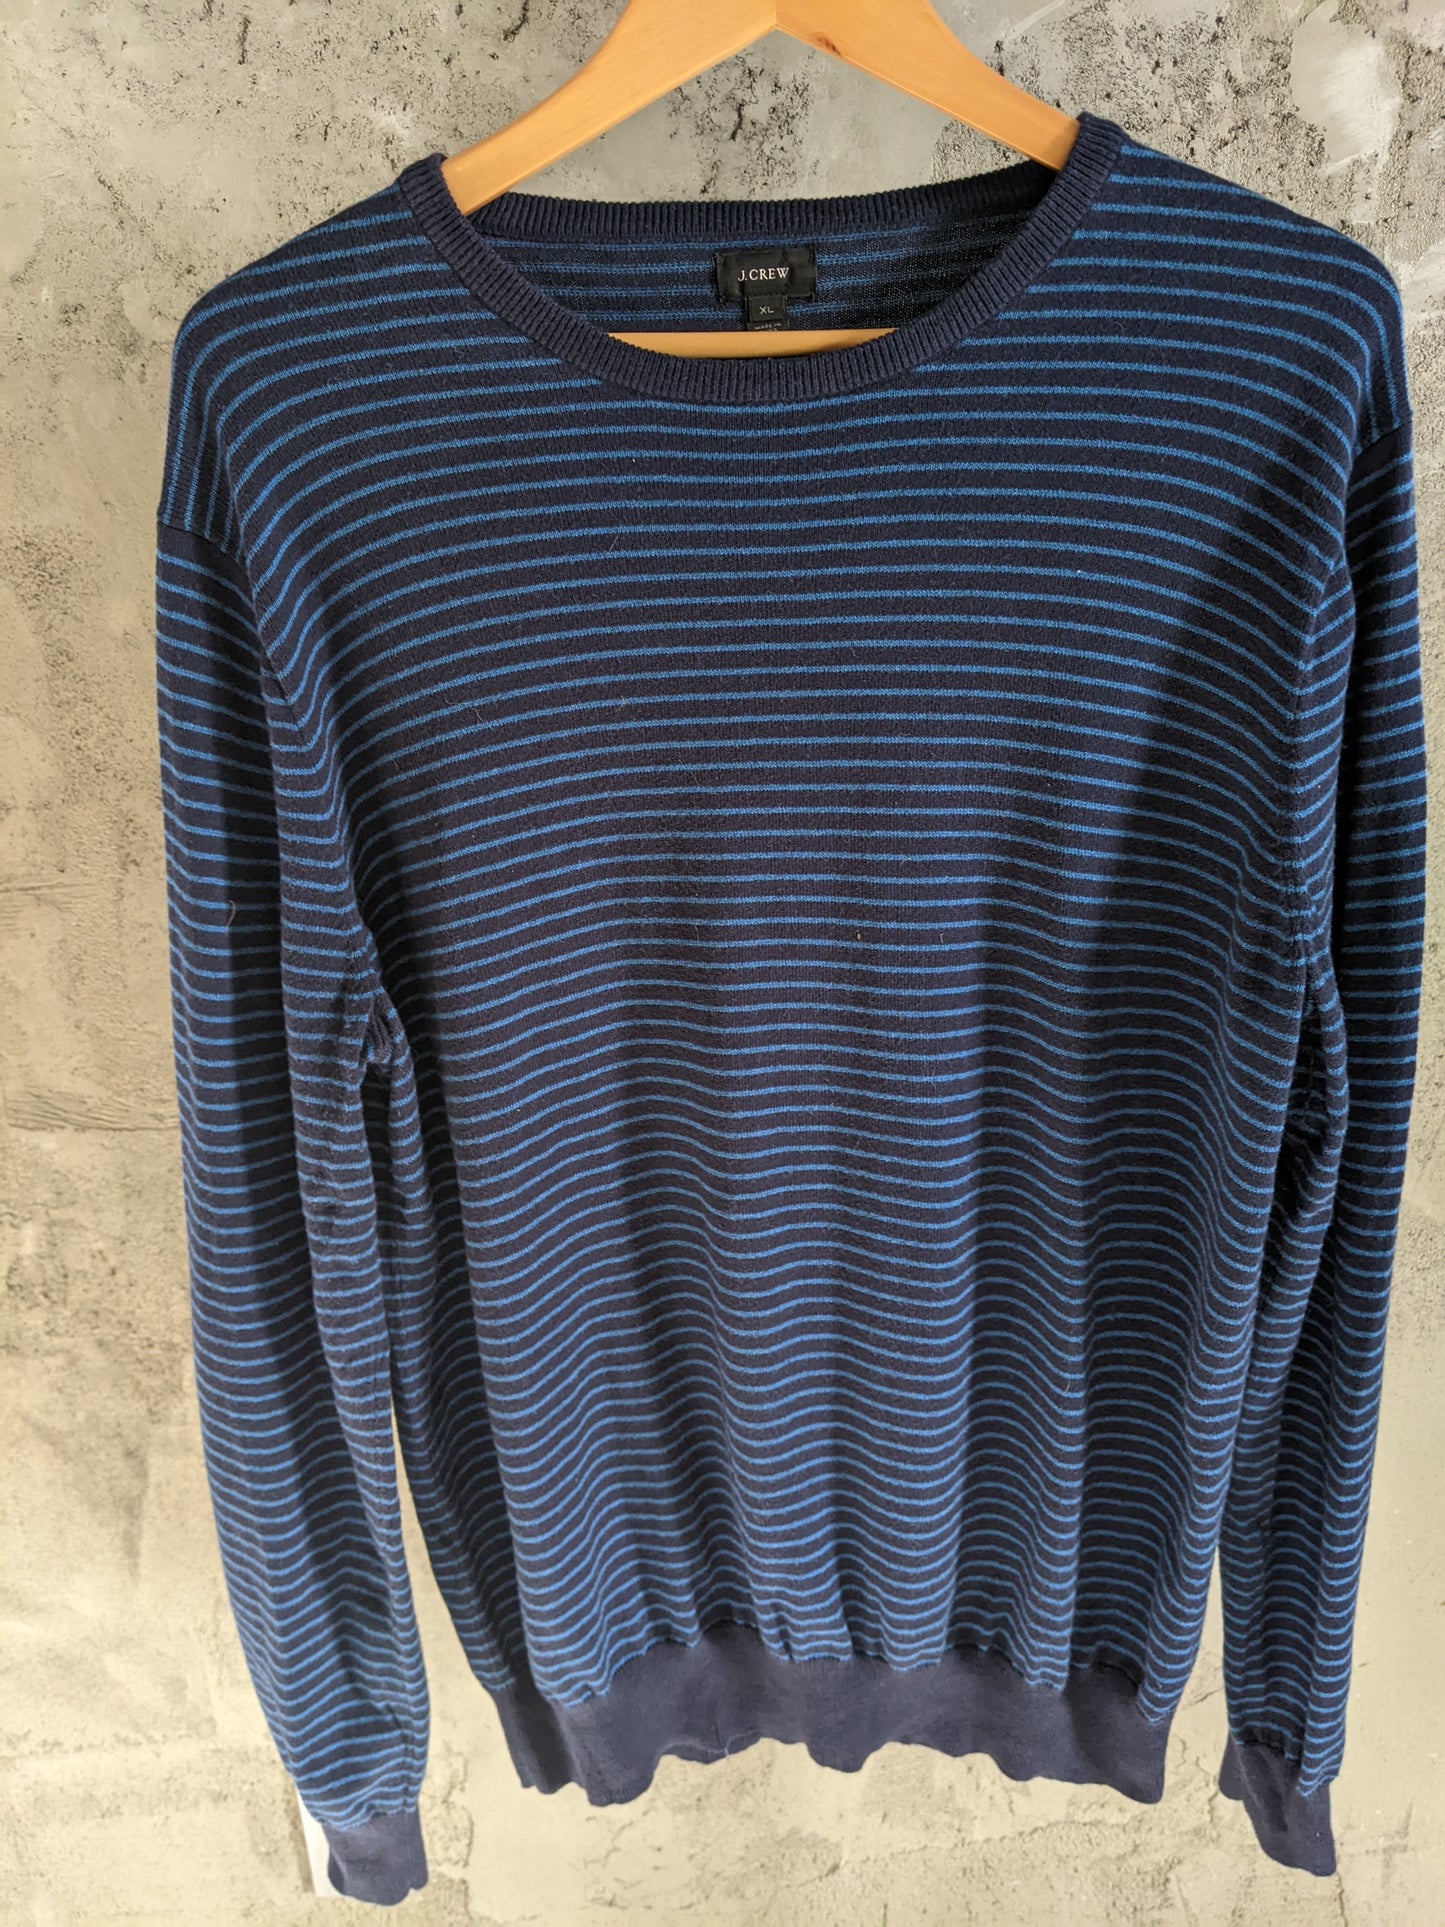 J Crew men's blue striped sweater size XL